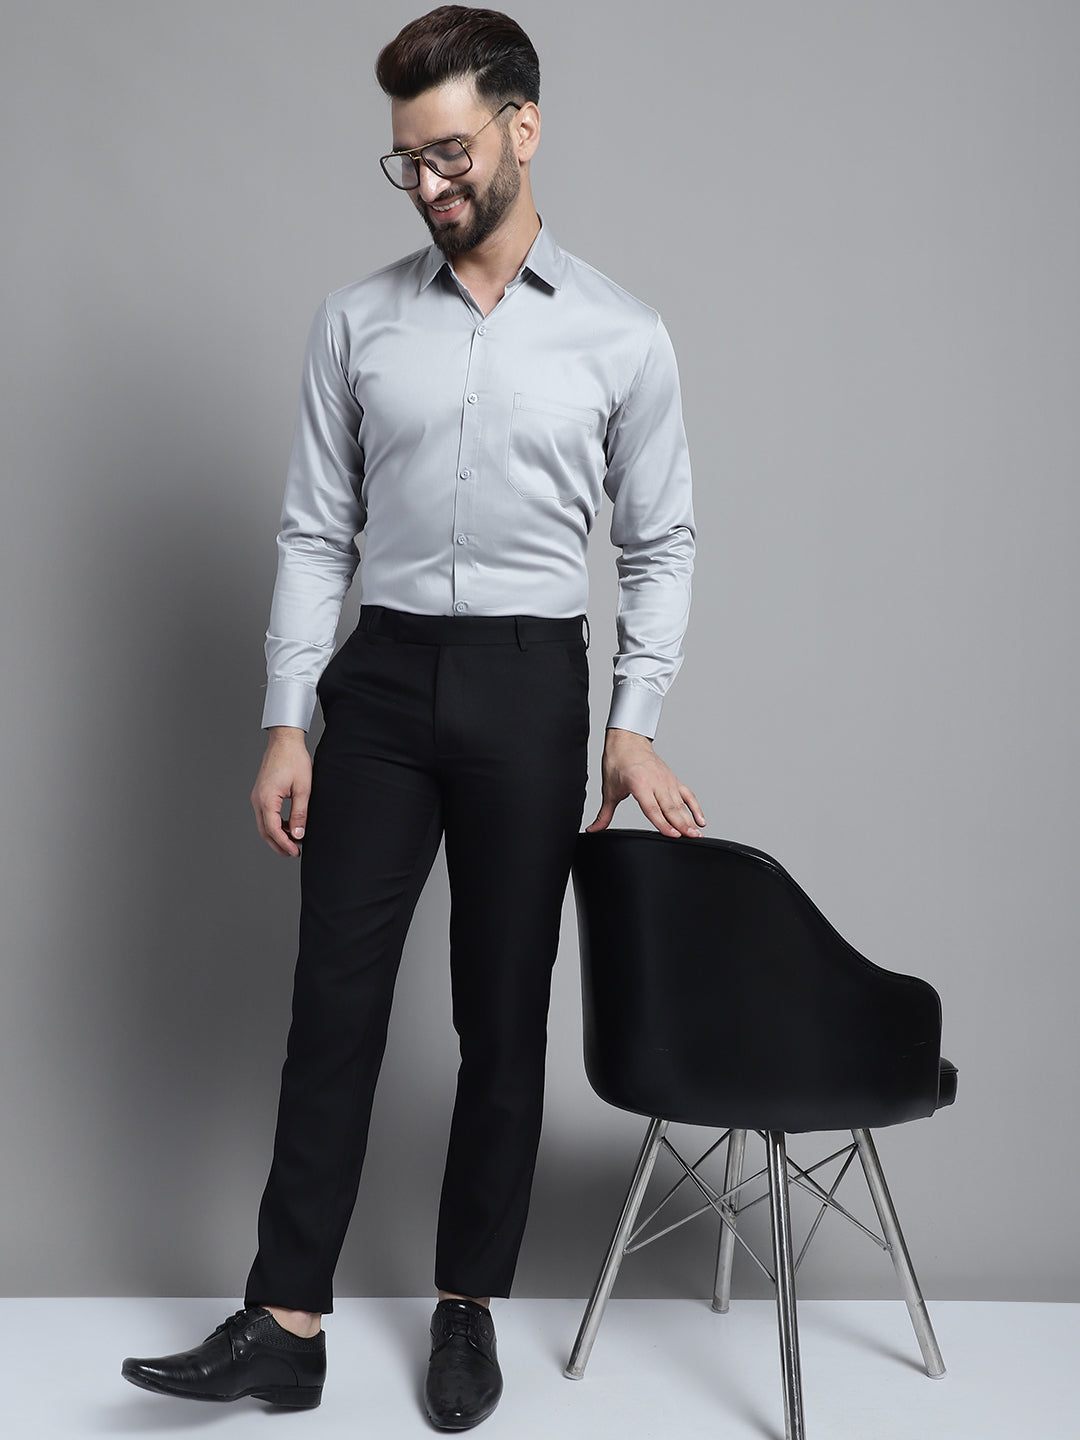 Men's Cotton Solid Formal Shirt